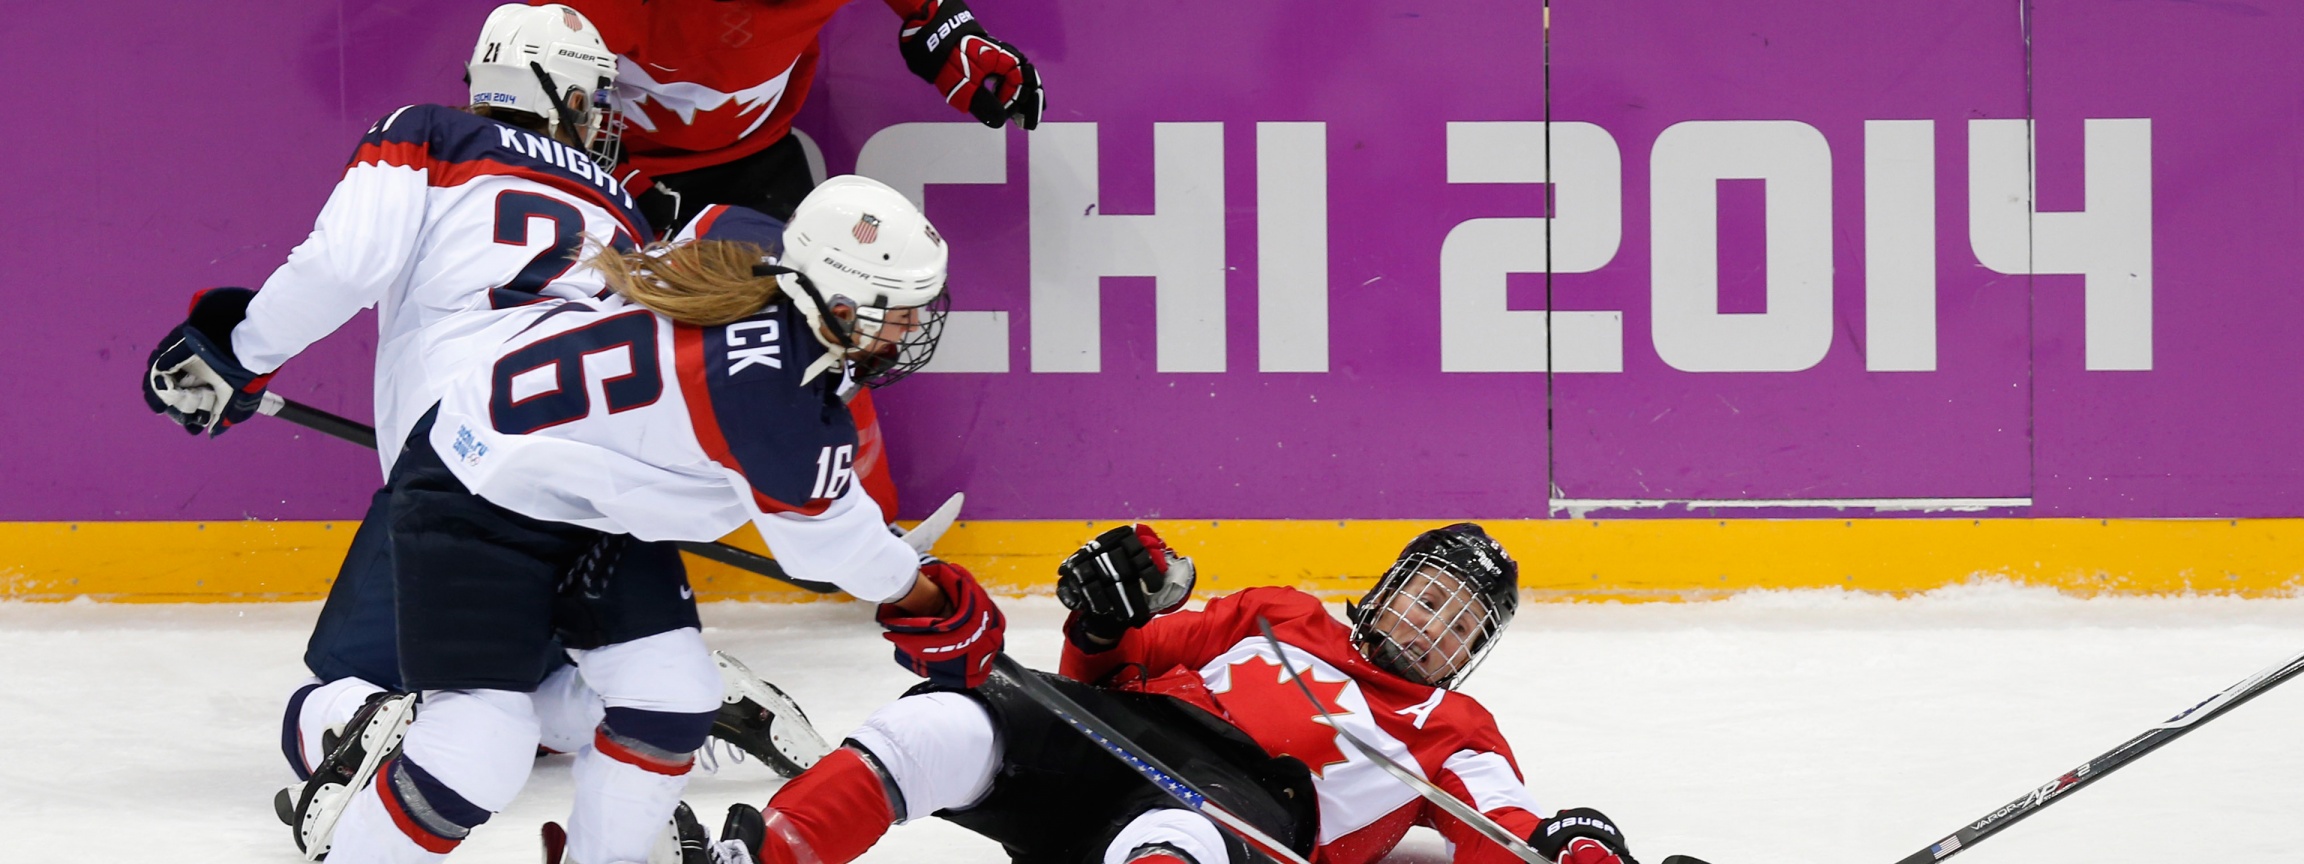 Ice Hockey Women Match In Sochi 2014